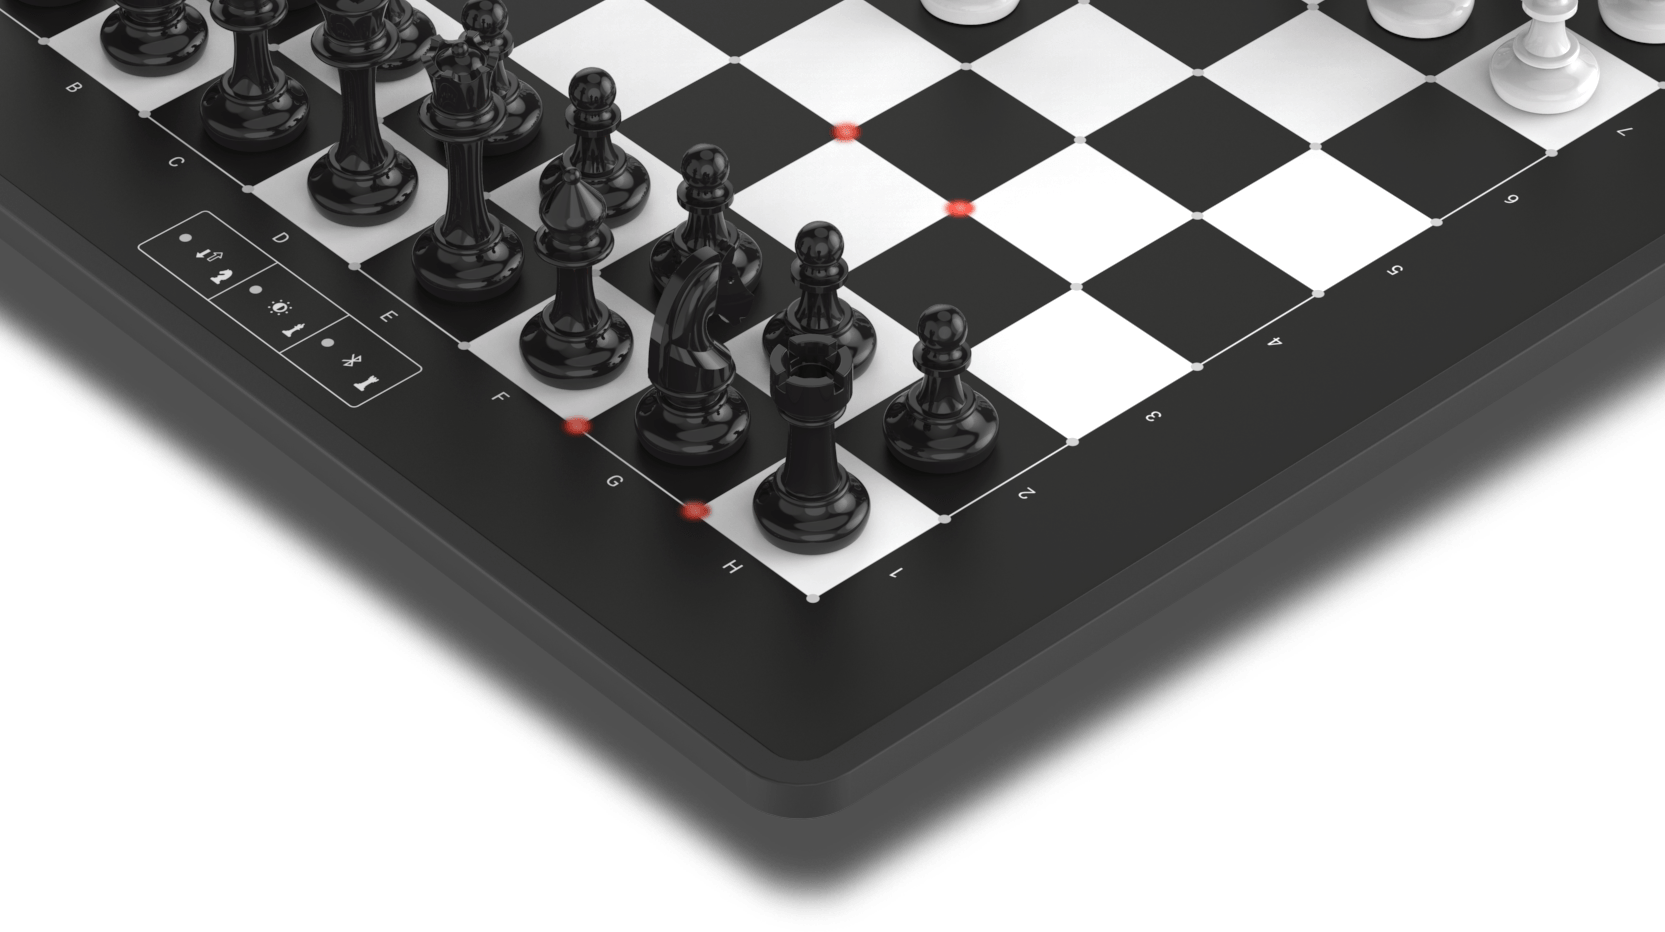  GENIFOX Electronic Chess Board Set - Luxury Play on